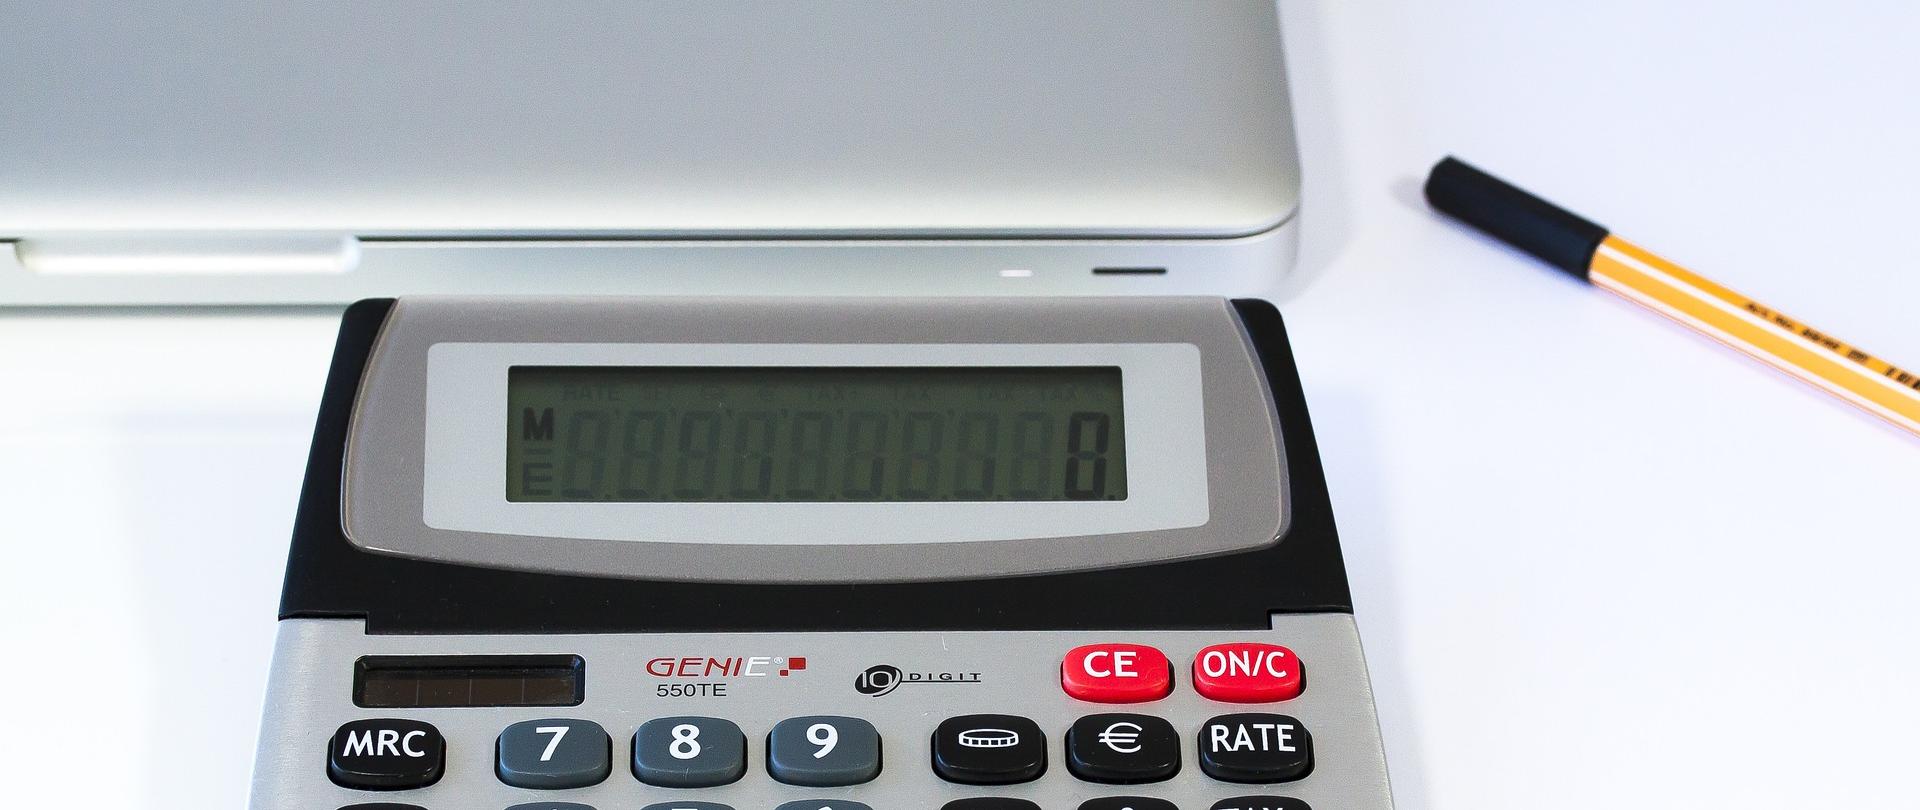 Calculator/Kalkulator